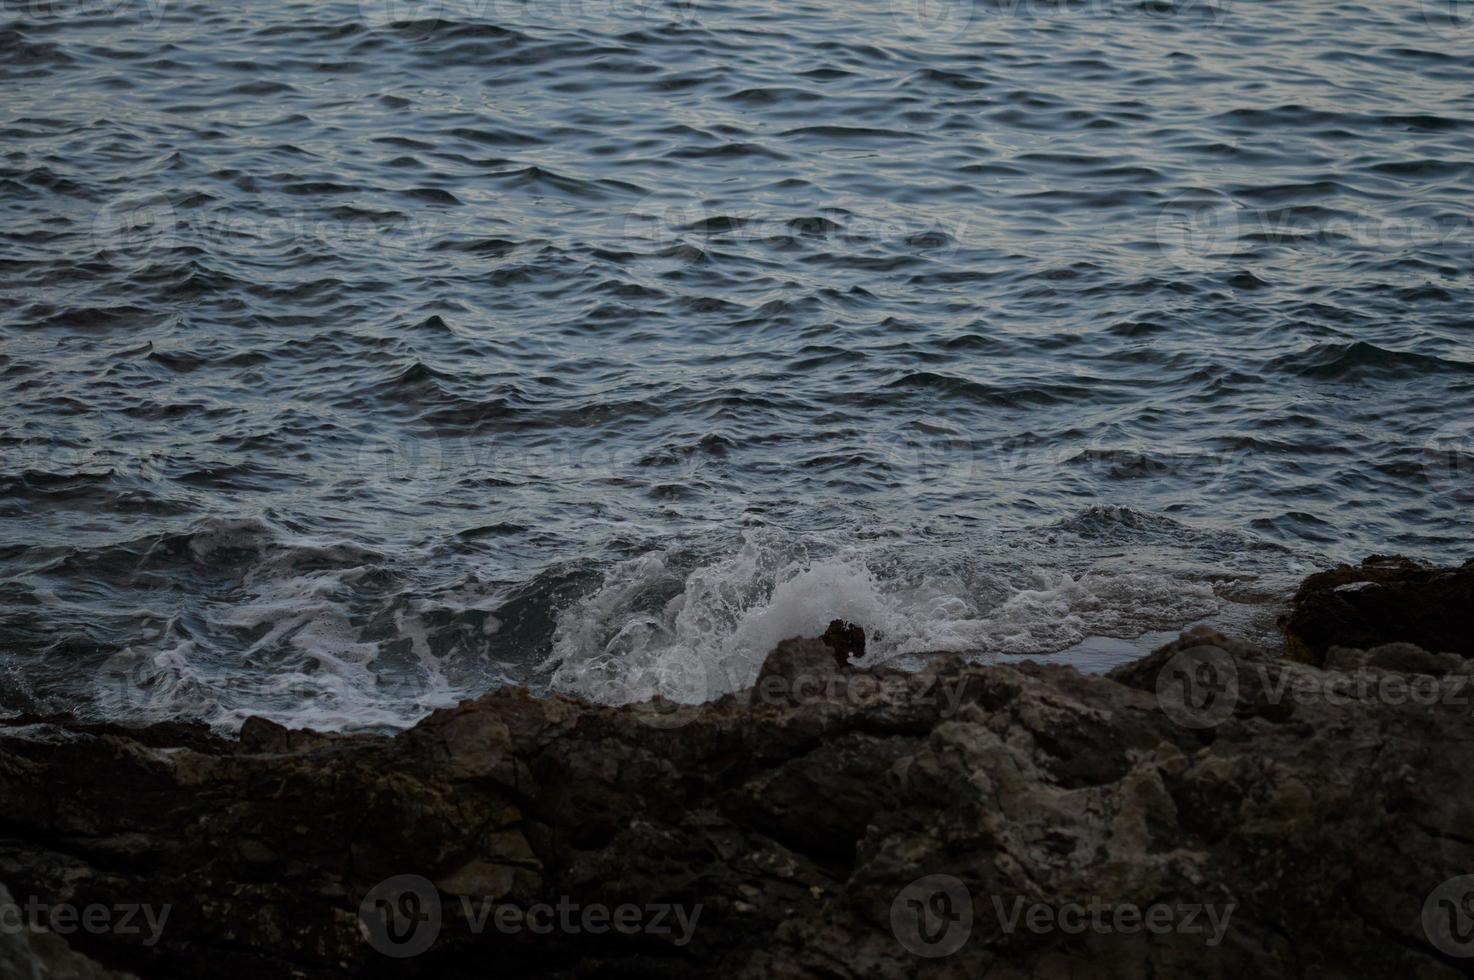 zee golven crashen in rotsen. foto